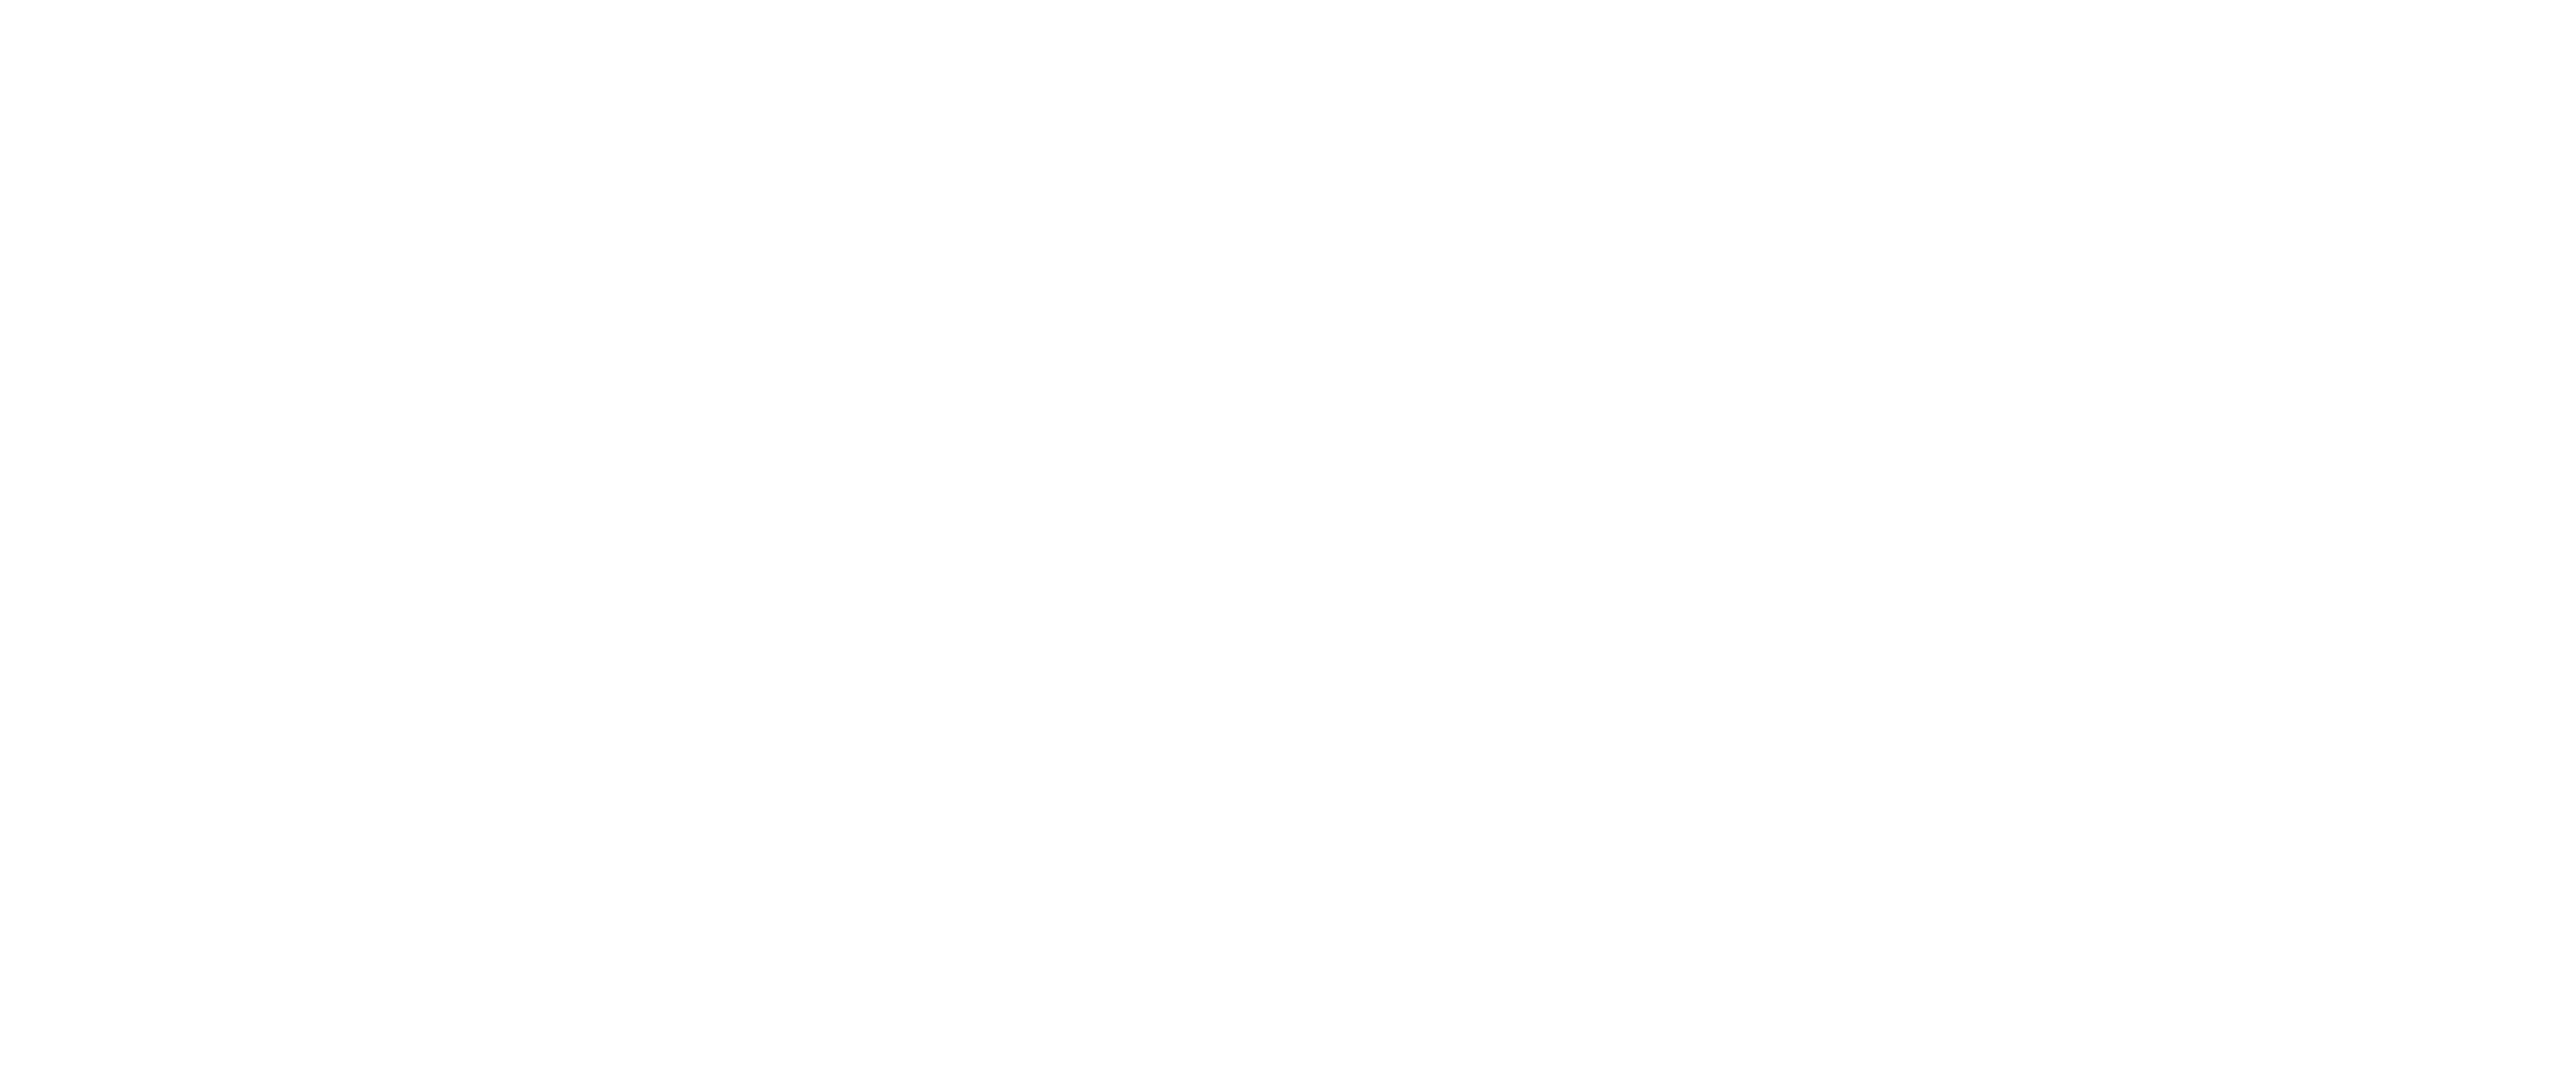 A plain white triangle shape illustrating a summit.